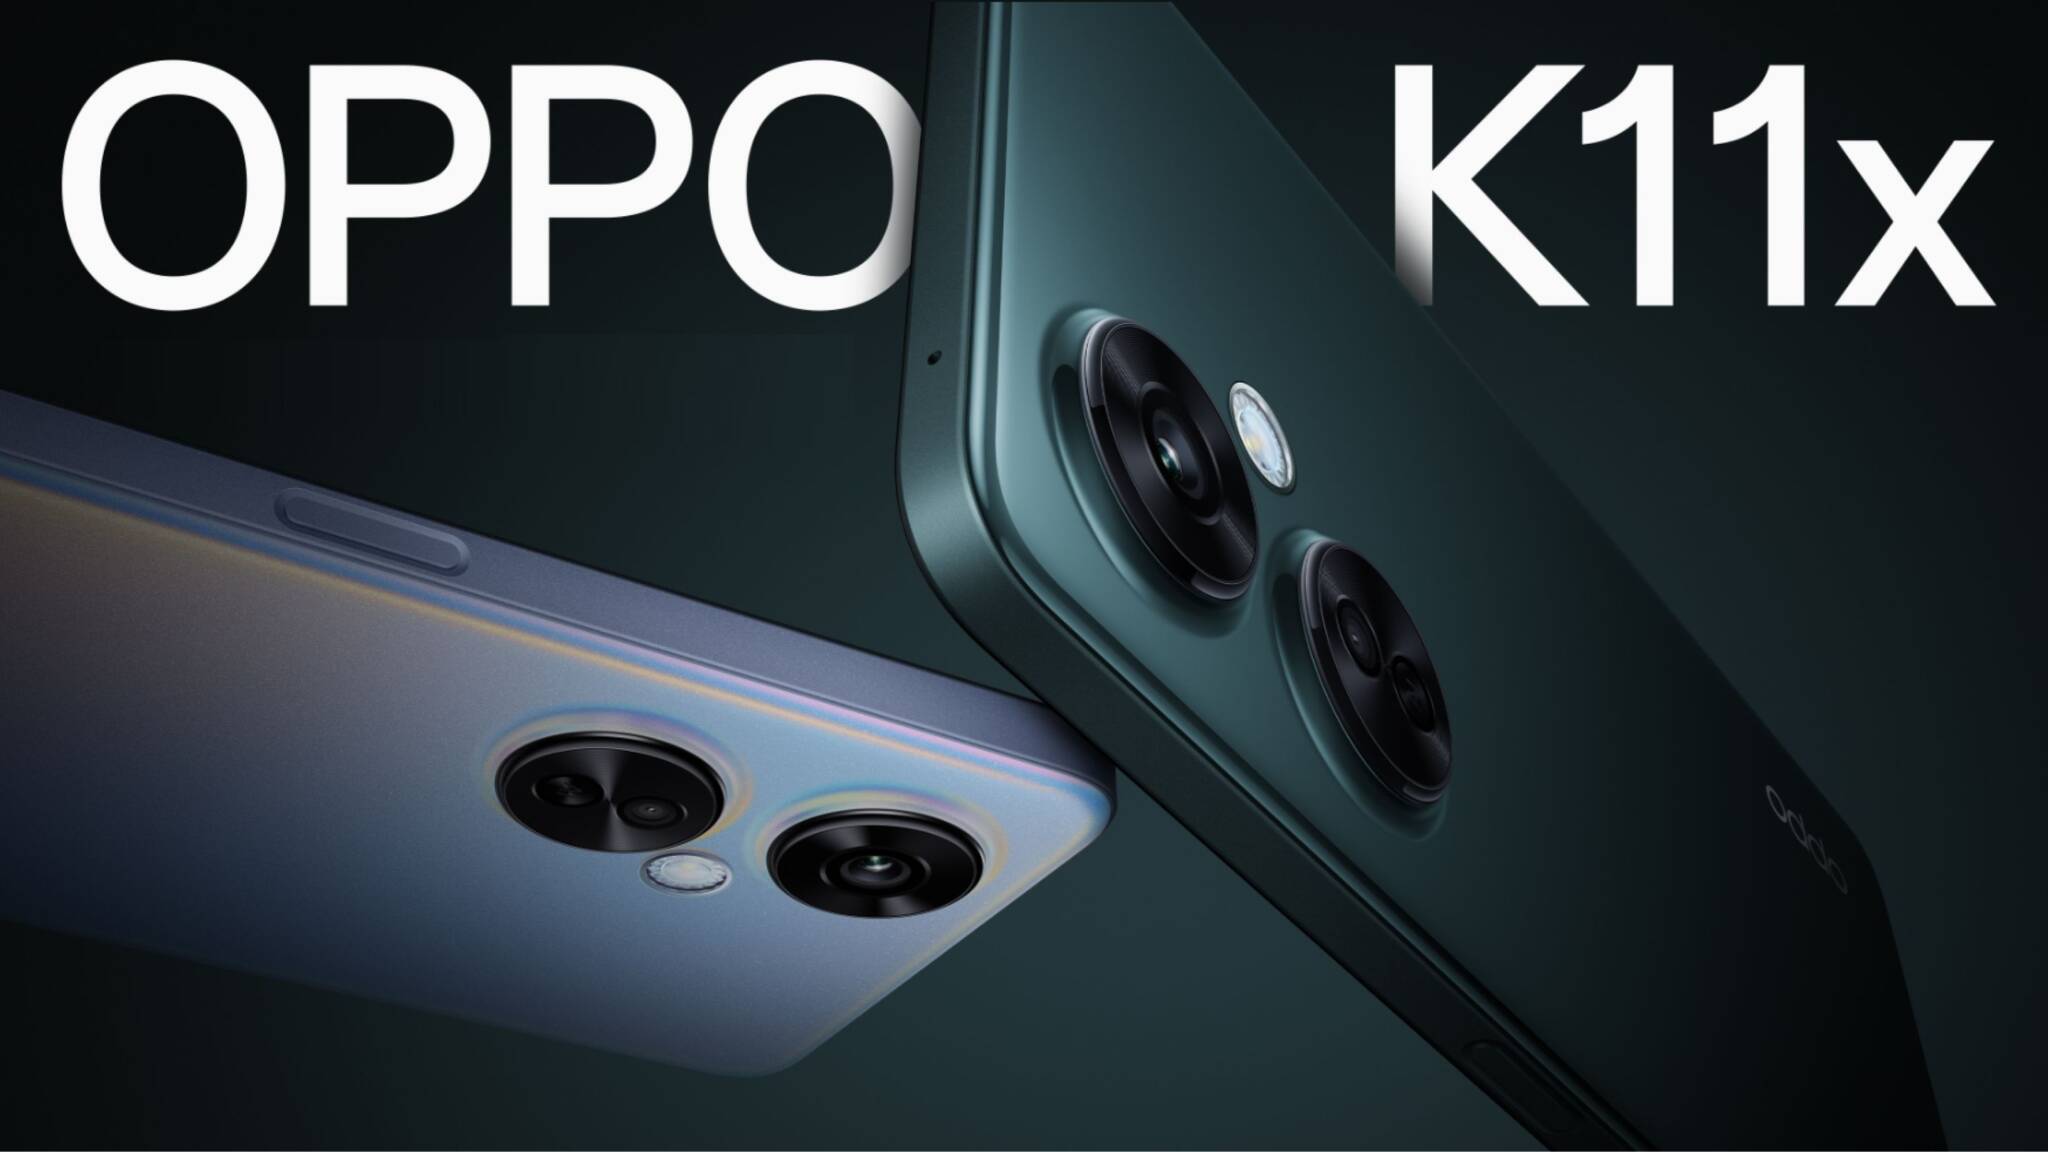 Oppo K11x, Oppo K11x Revelado: Snapdragon 695 SoC, Câmara de 108MP e Ecrã de 120Hz